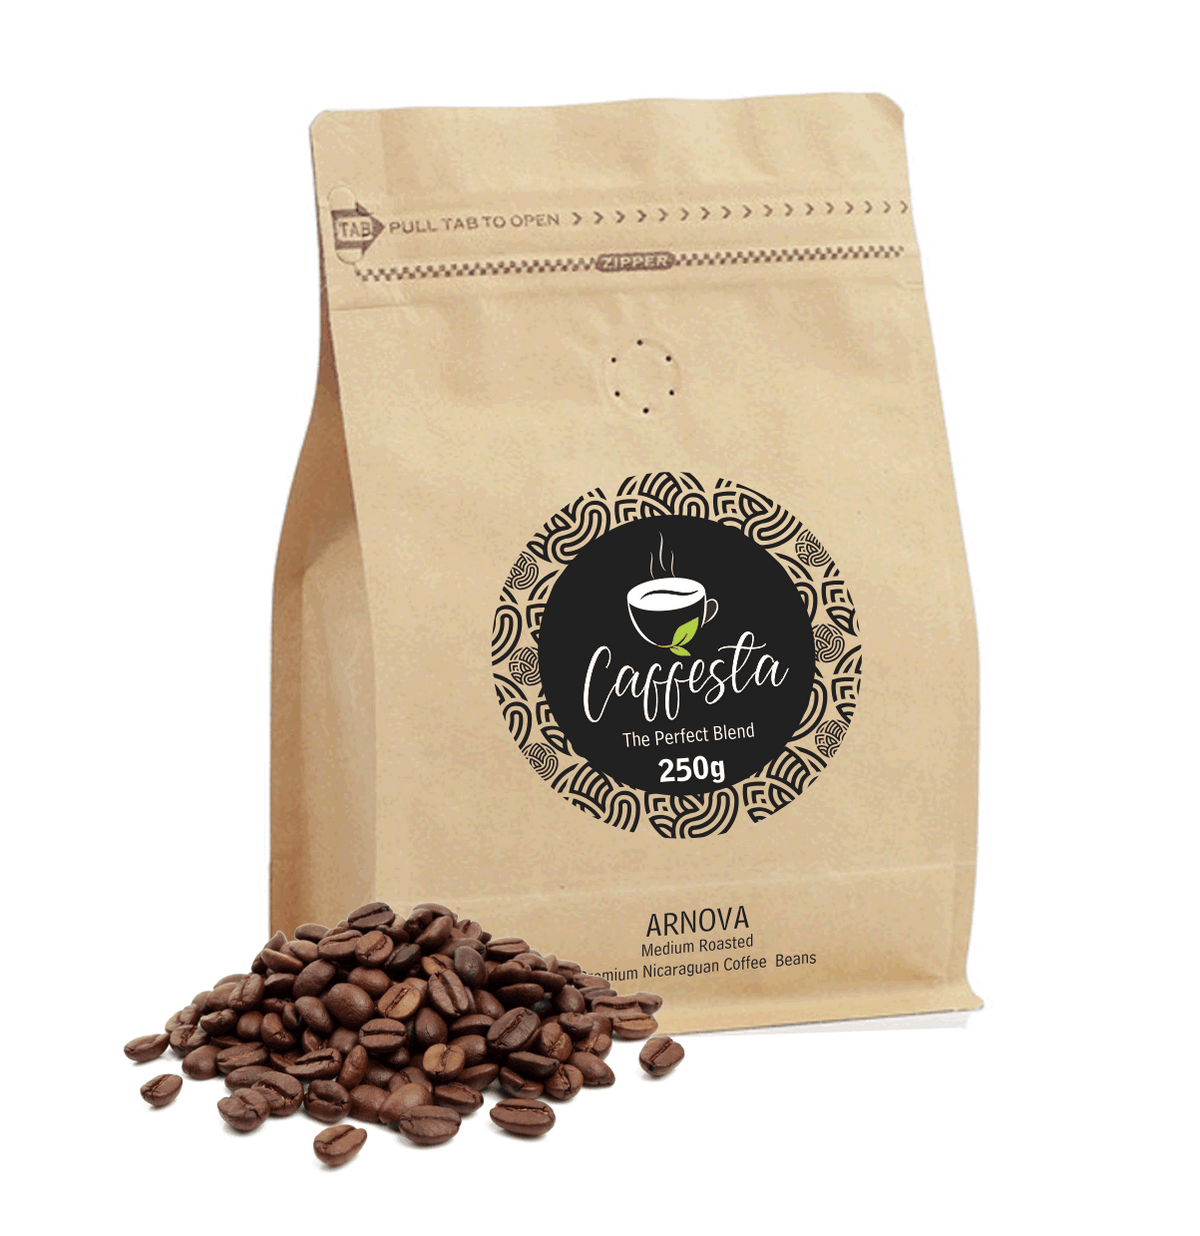 Caffesta Arnova Medium Roasted Nicaraguan Coffee Beans 250g